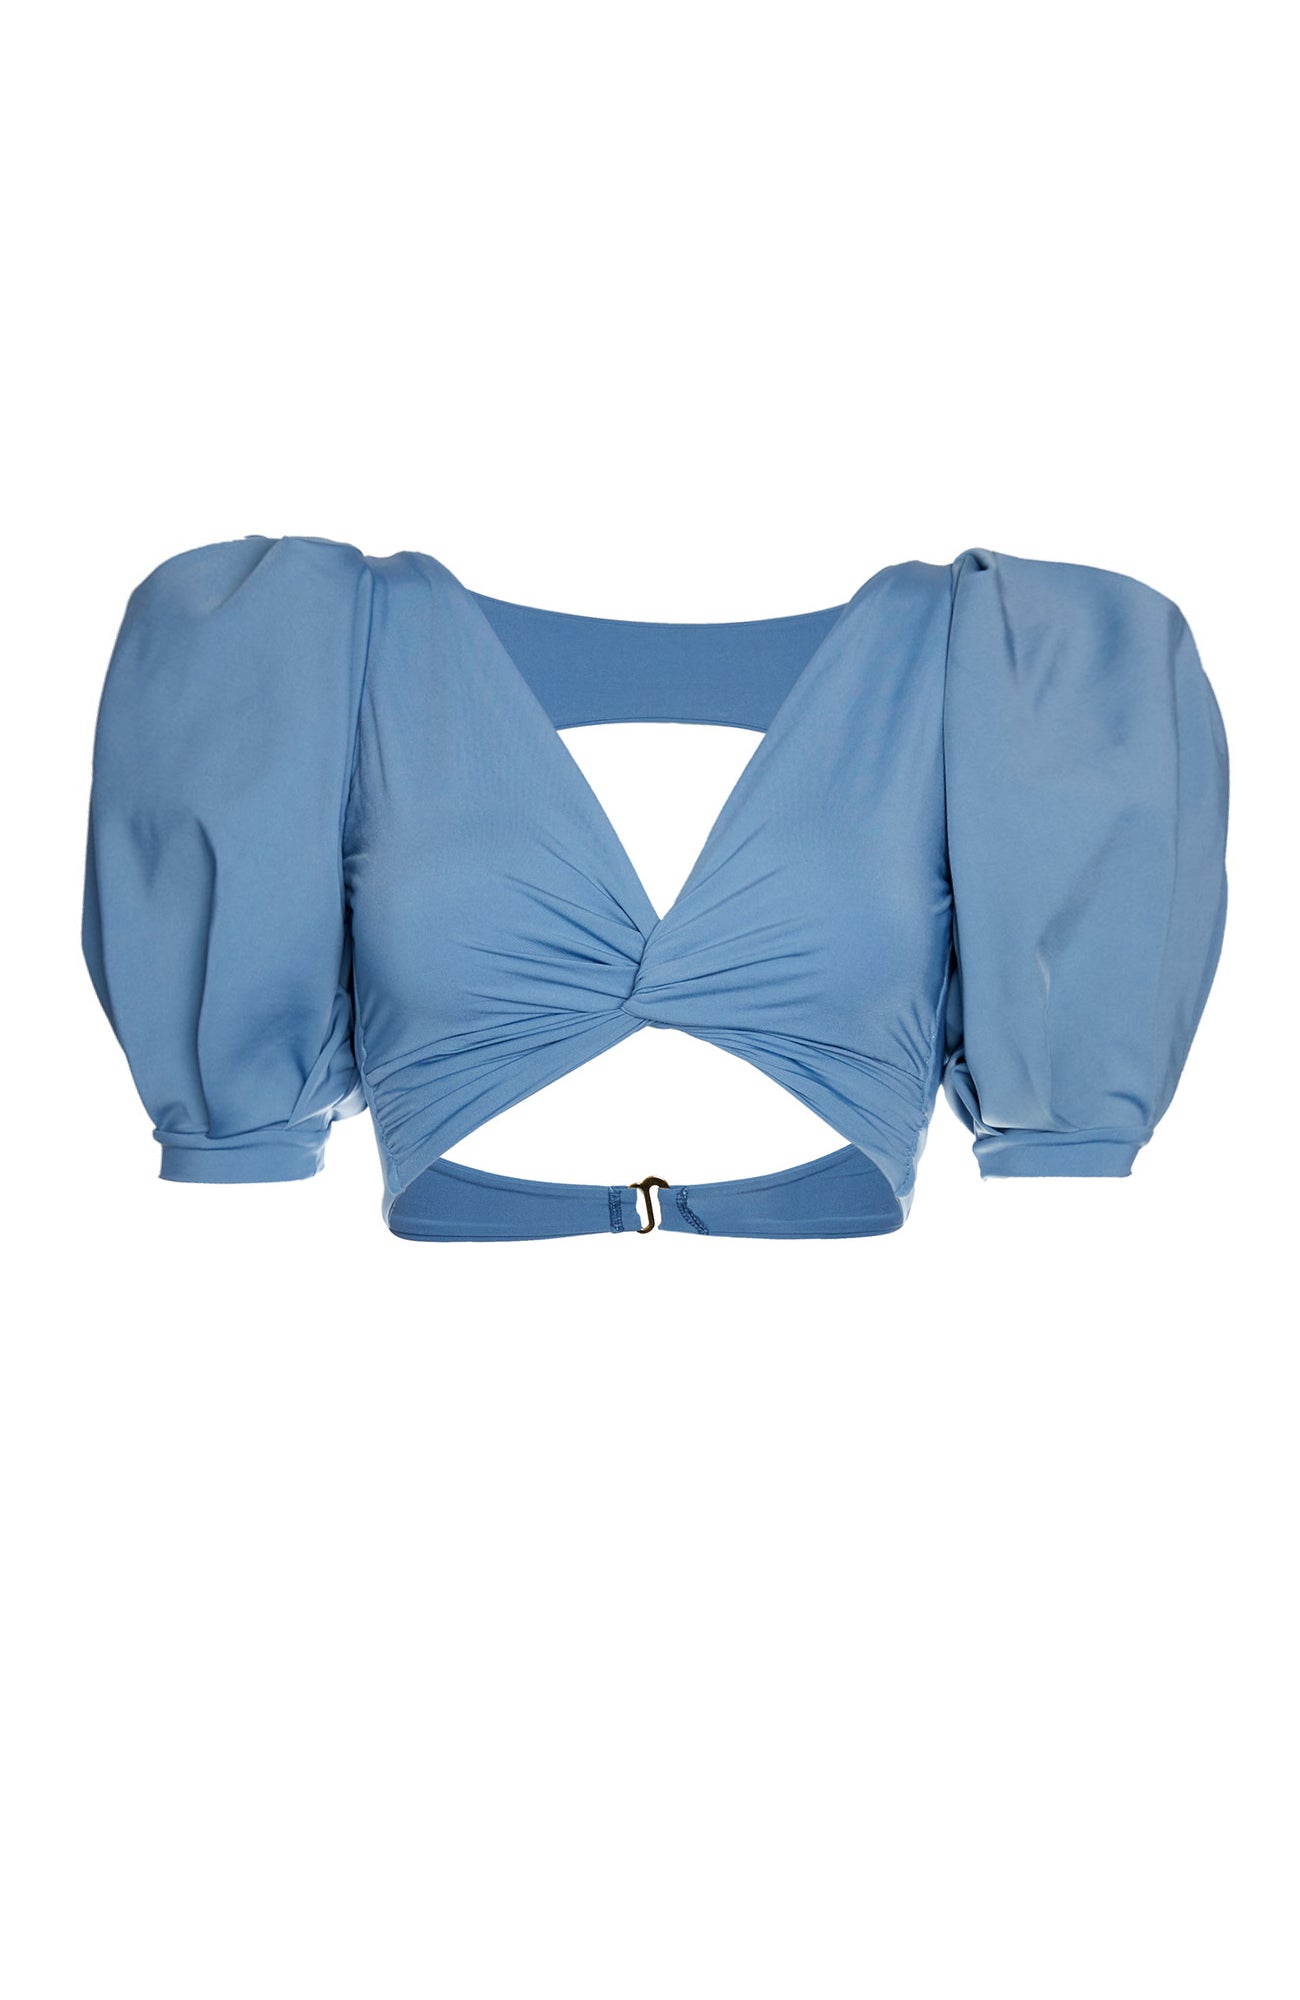 Sayulita Sky Blue Puff Sleeve Bikini Top by Sanlier